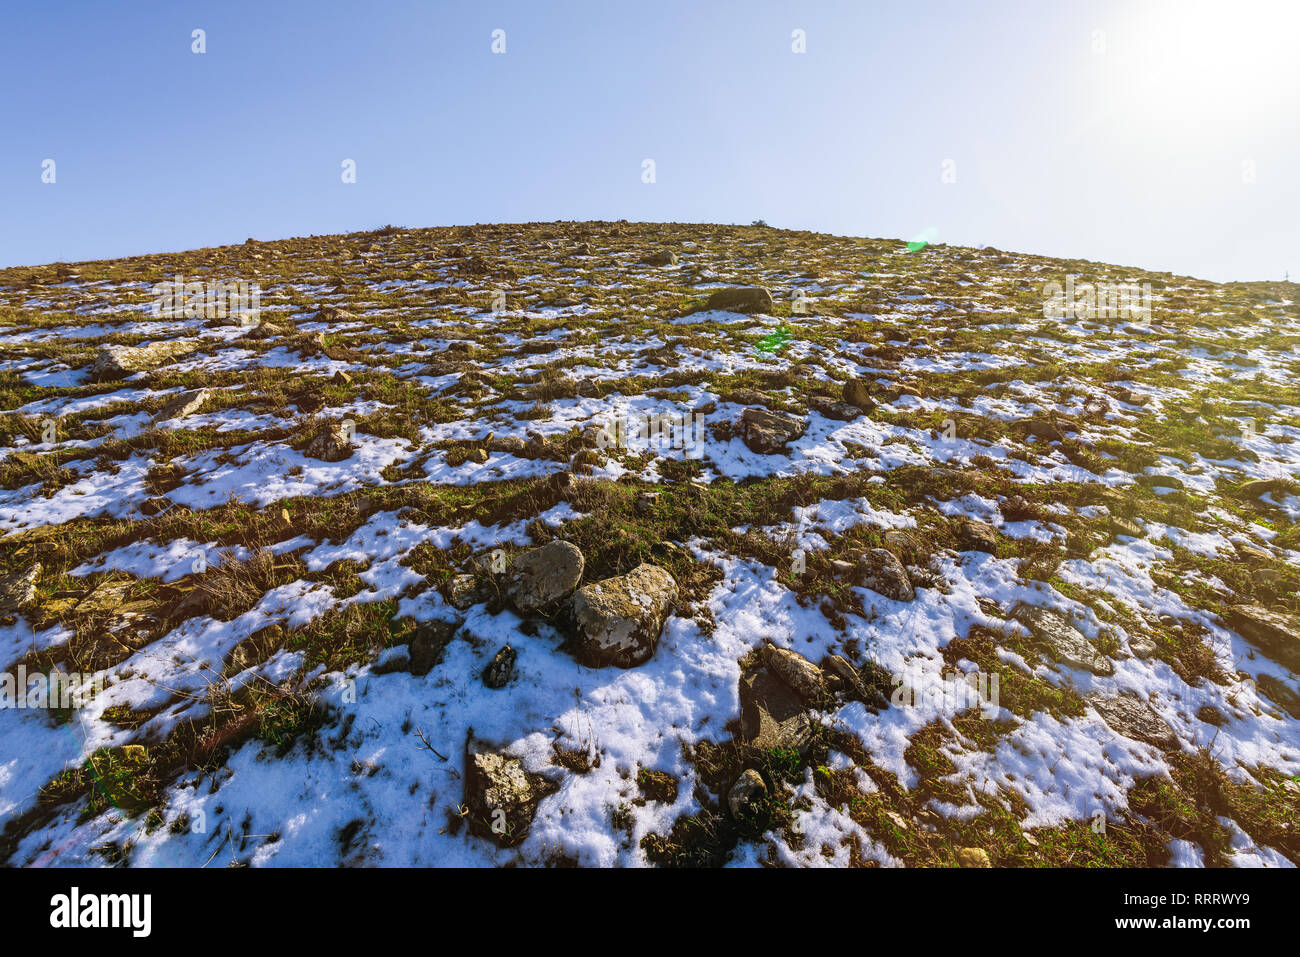 Snowy alpine Hügel mit spärlichem Gras Stockfoto